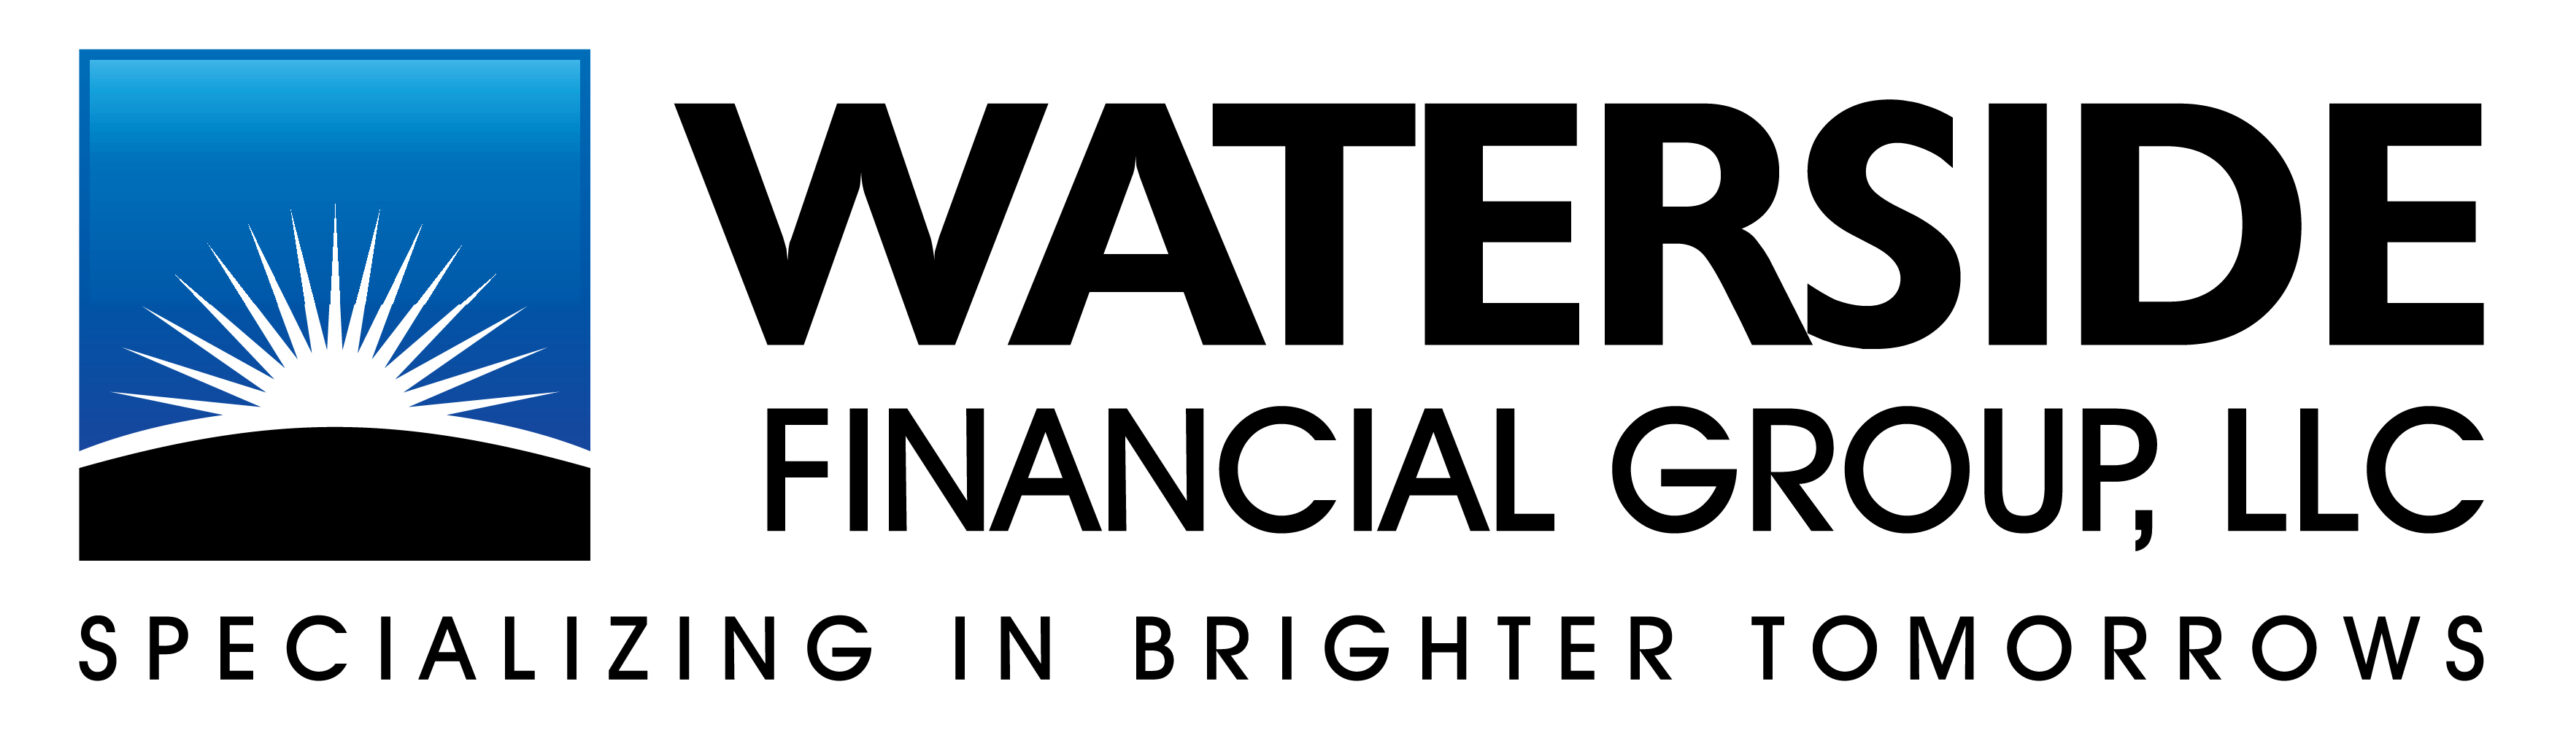 Waterside Financial Group